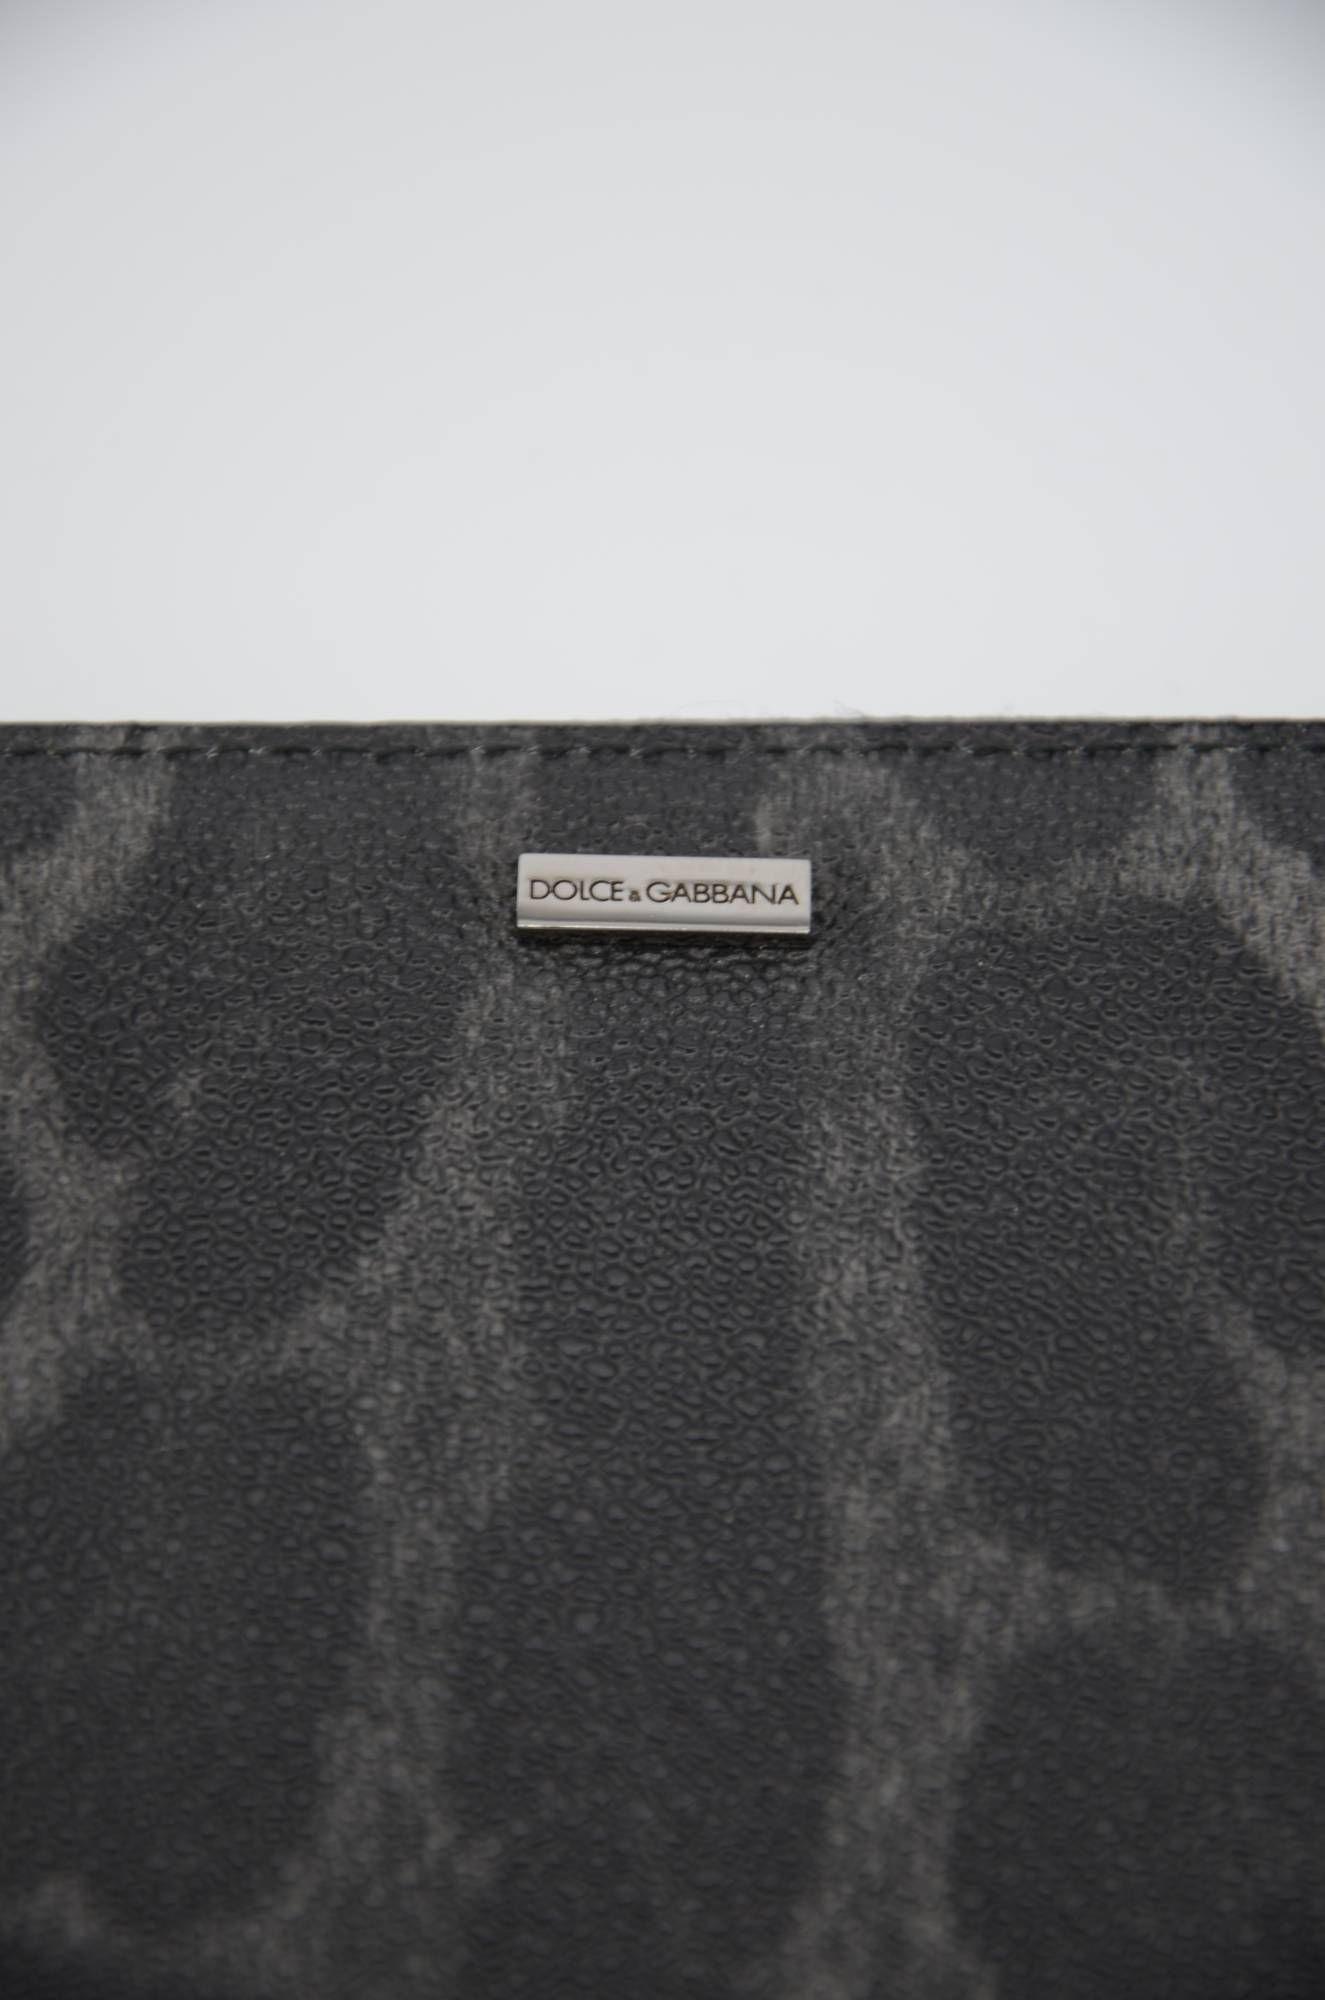 Dolce & Gabbana Men Leather Wallet
Animal Print
Dolce & Gabbana Plate
With Zipper